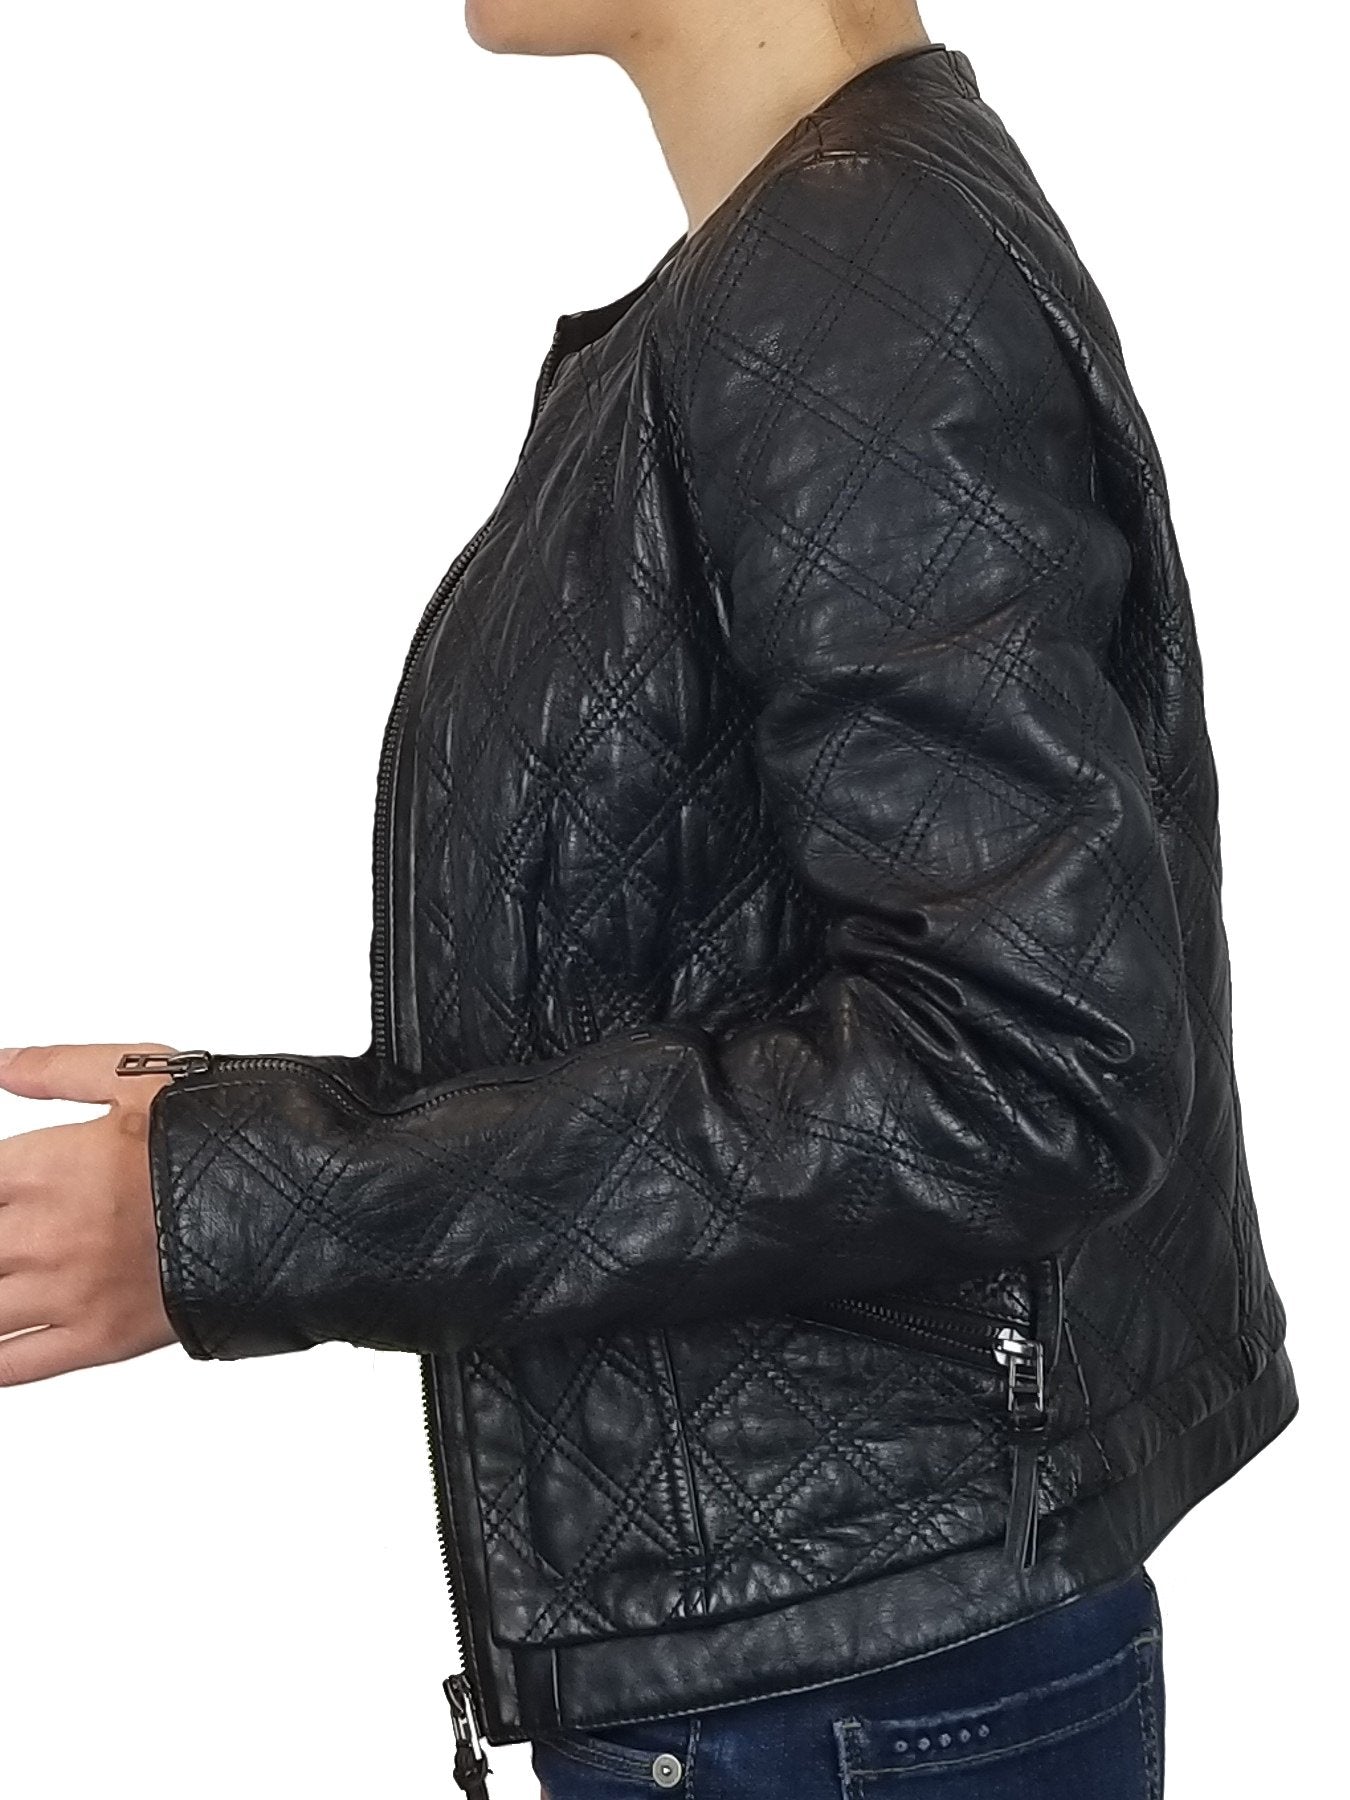 Zara Real Leather Jacket, Let your confidence shine through a kickass leather jacket., Black, 100% Leather, jacket, women's vintage leather jacket, women's designer leather jacket, women's black leather jacket, fashion